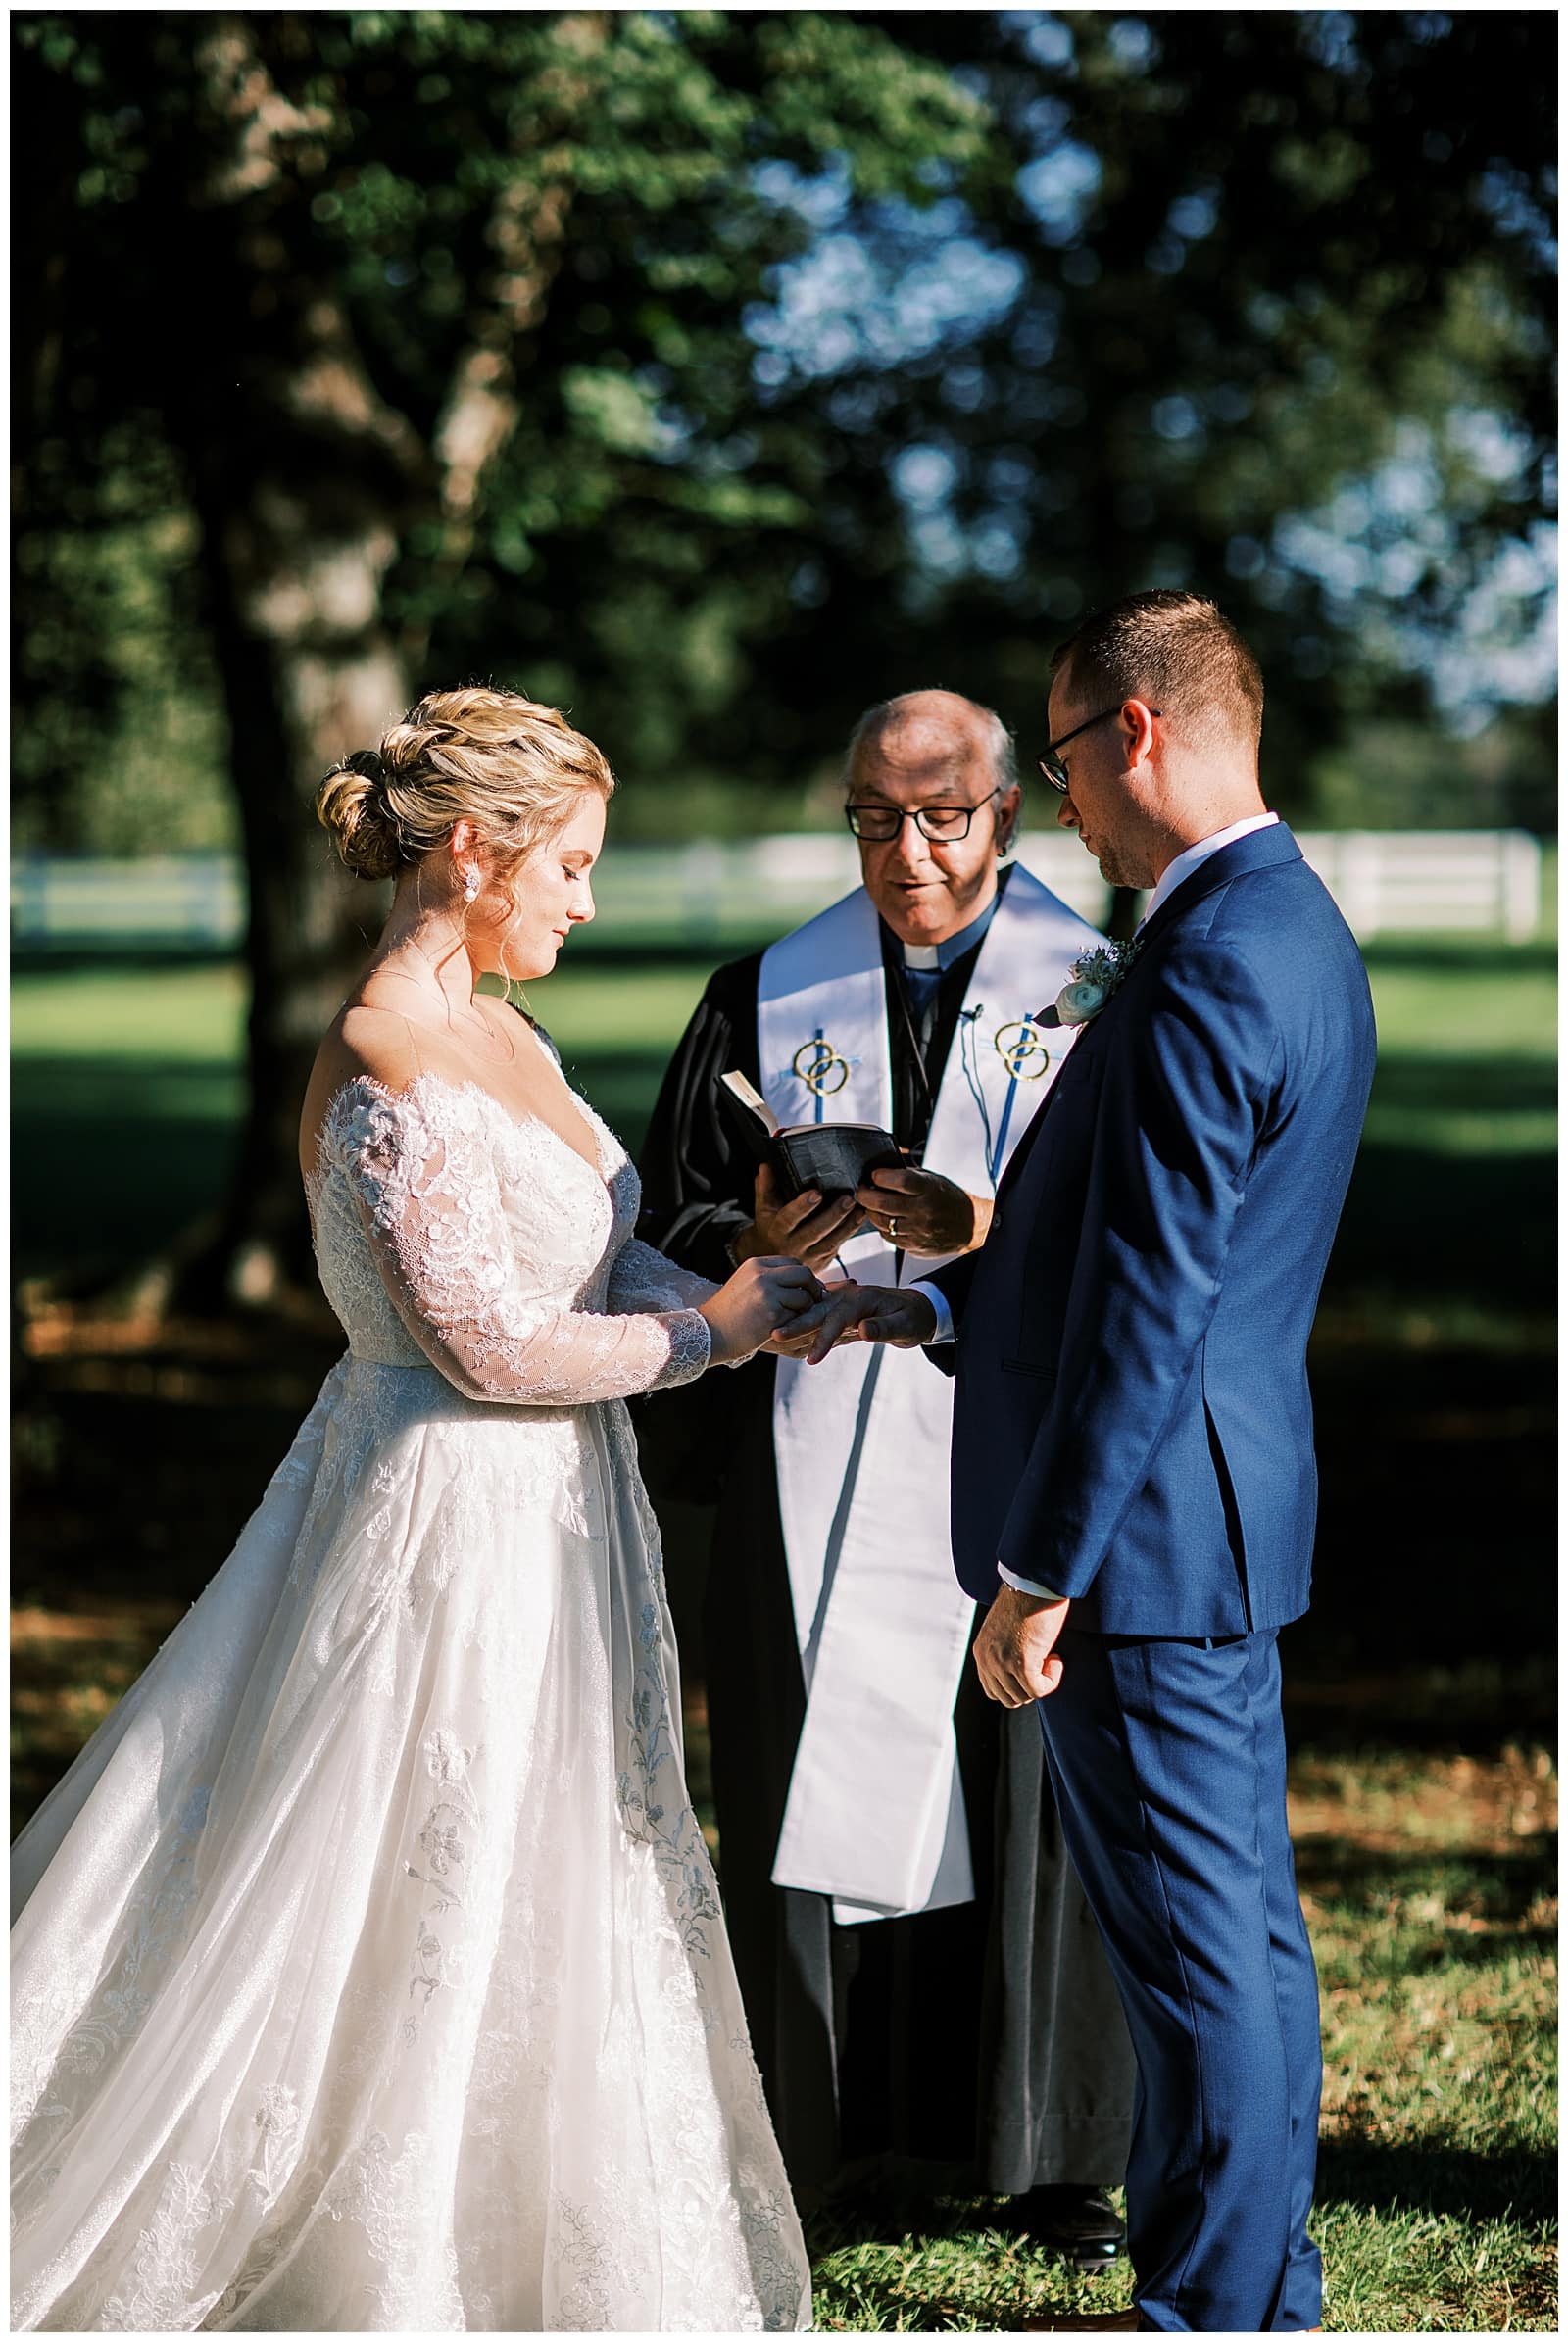 Danielle-Defayette-Photography-Castle-Hill-Cider-Charlottesville-Wedding-2020_0027.jpg